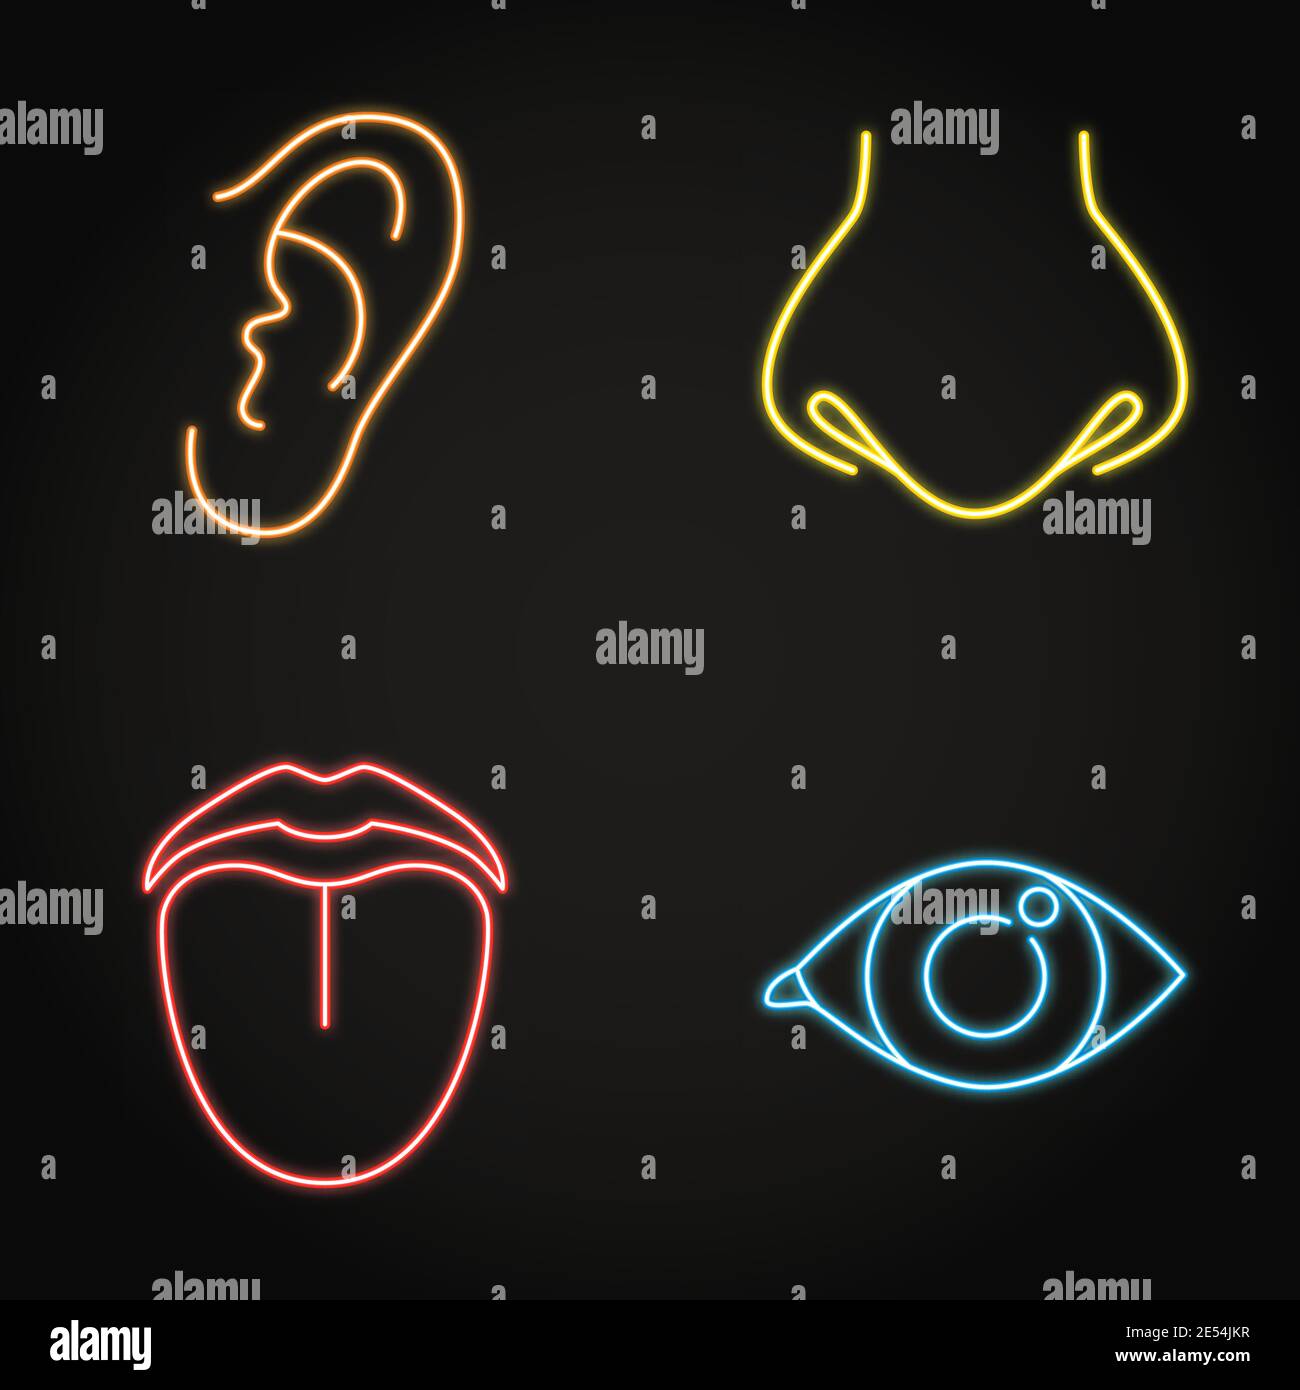 Sense organ neon icon set in line style. Human perception elements - vision, hearing, taste, smell. Vector illustration. Stock Vector